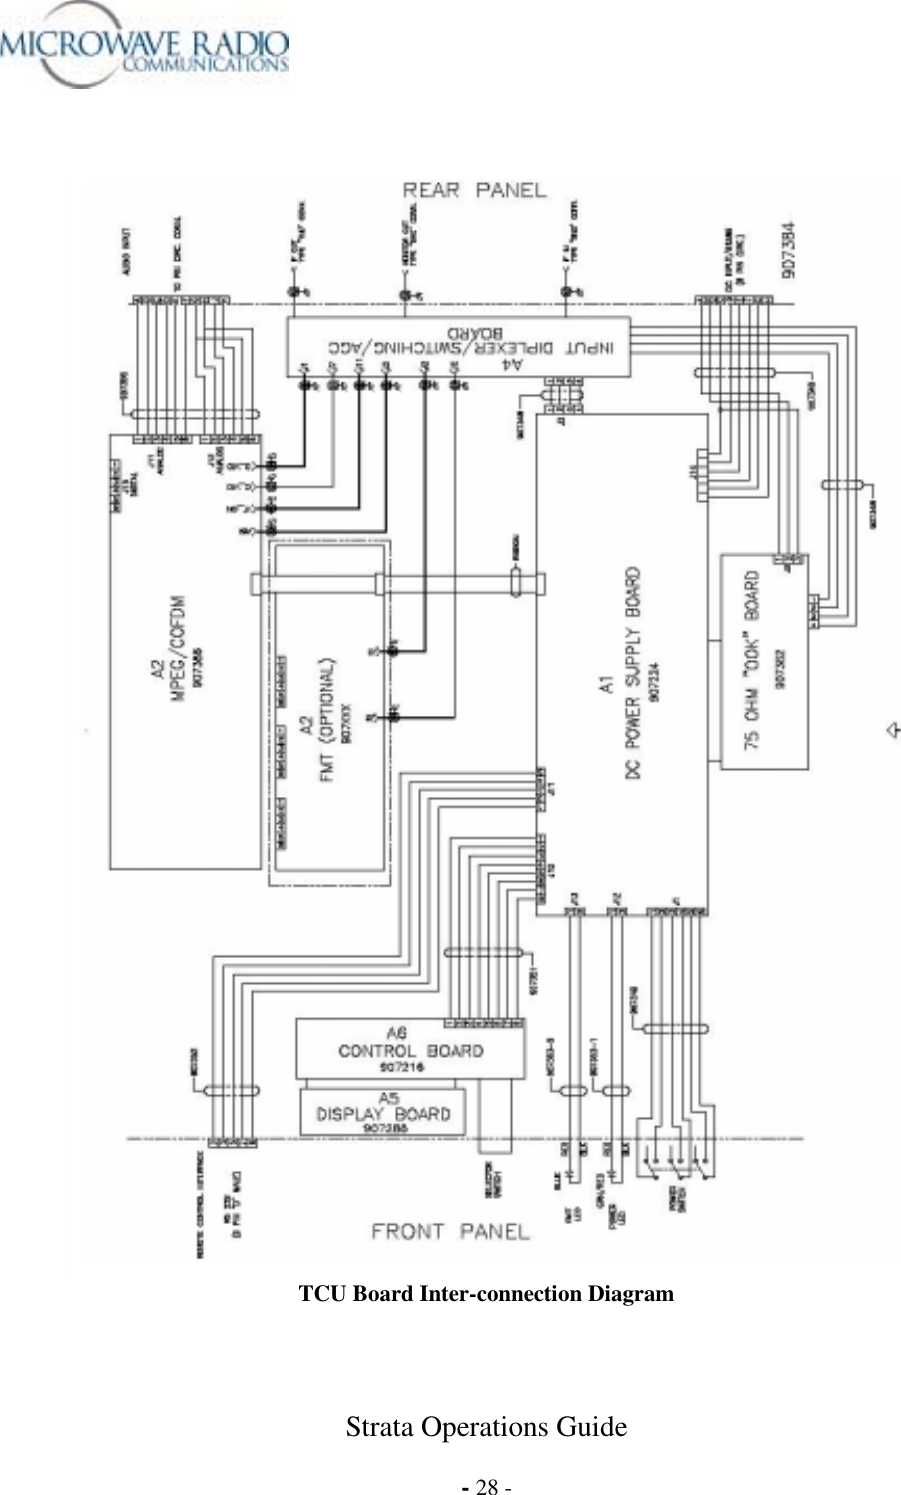  Strata Operations Guide  - 28 -    TCU Board Inter-connection Diagram 